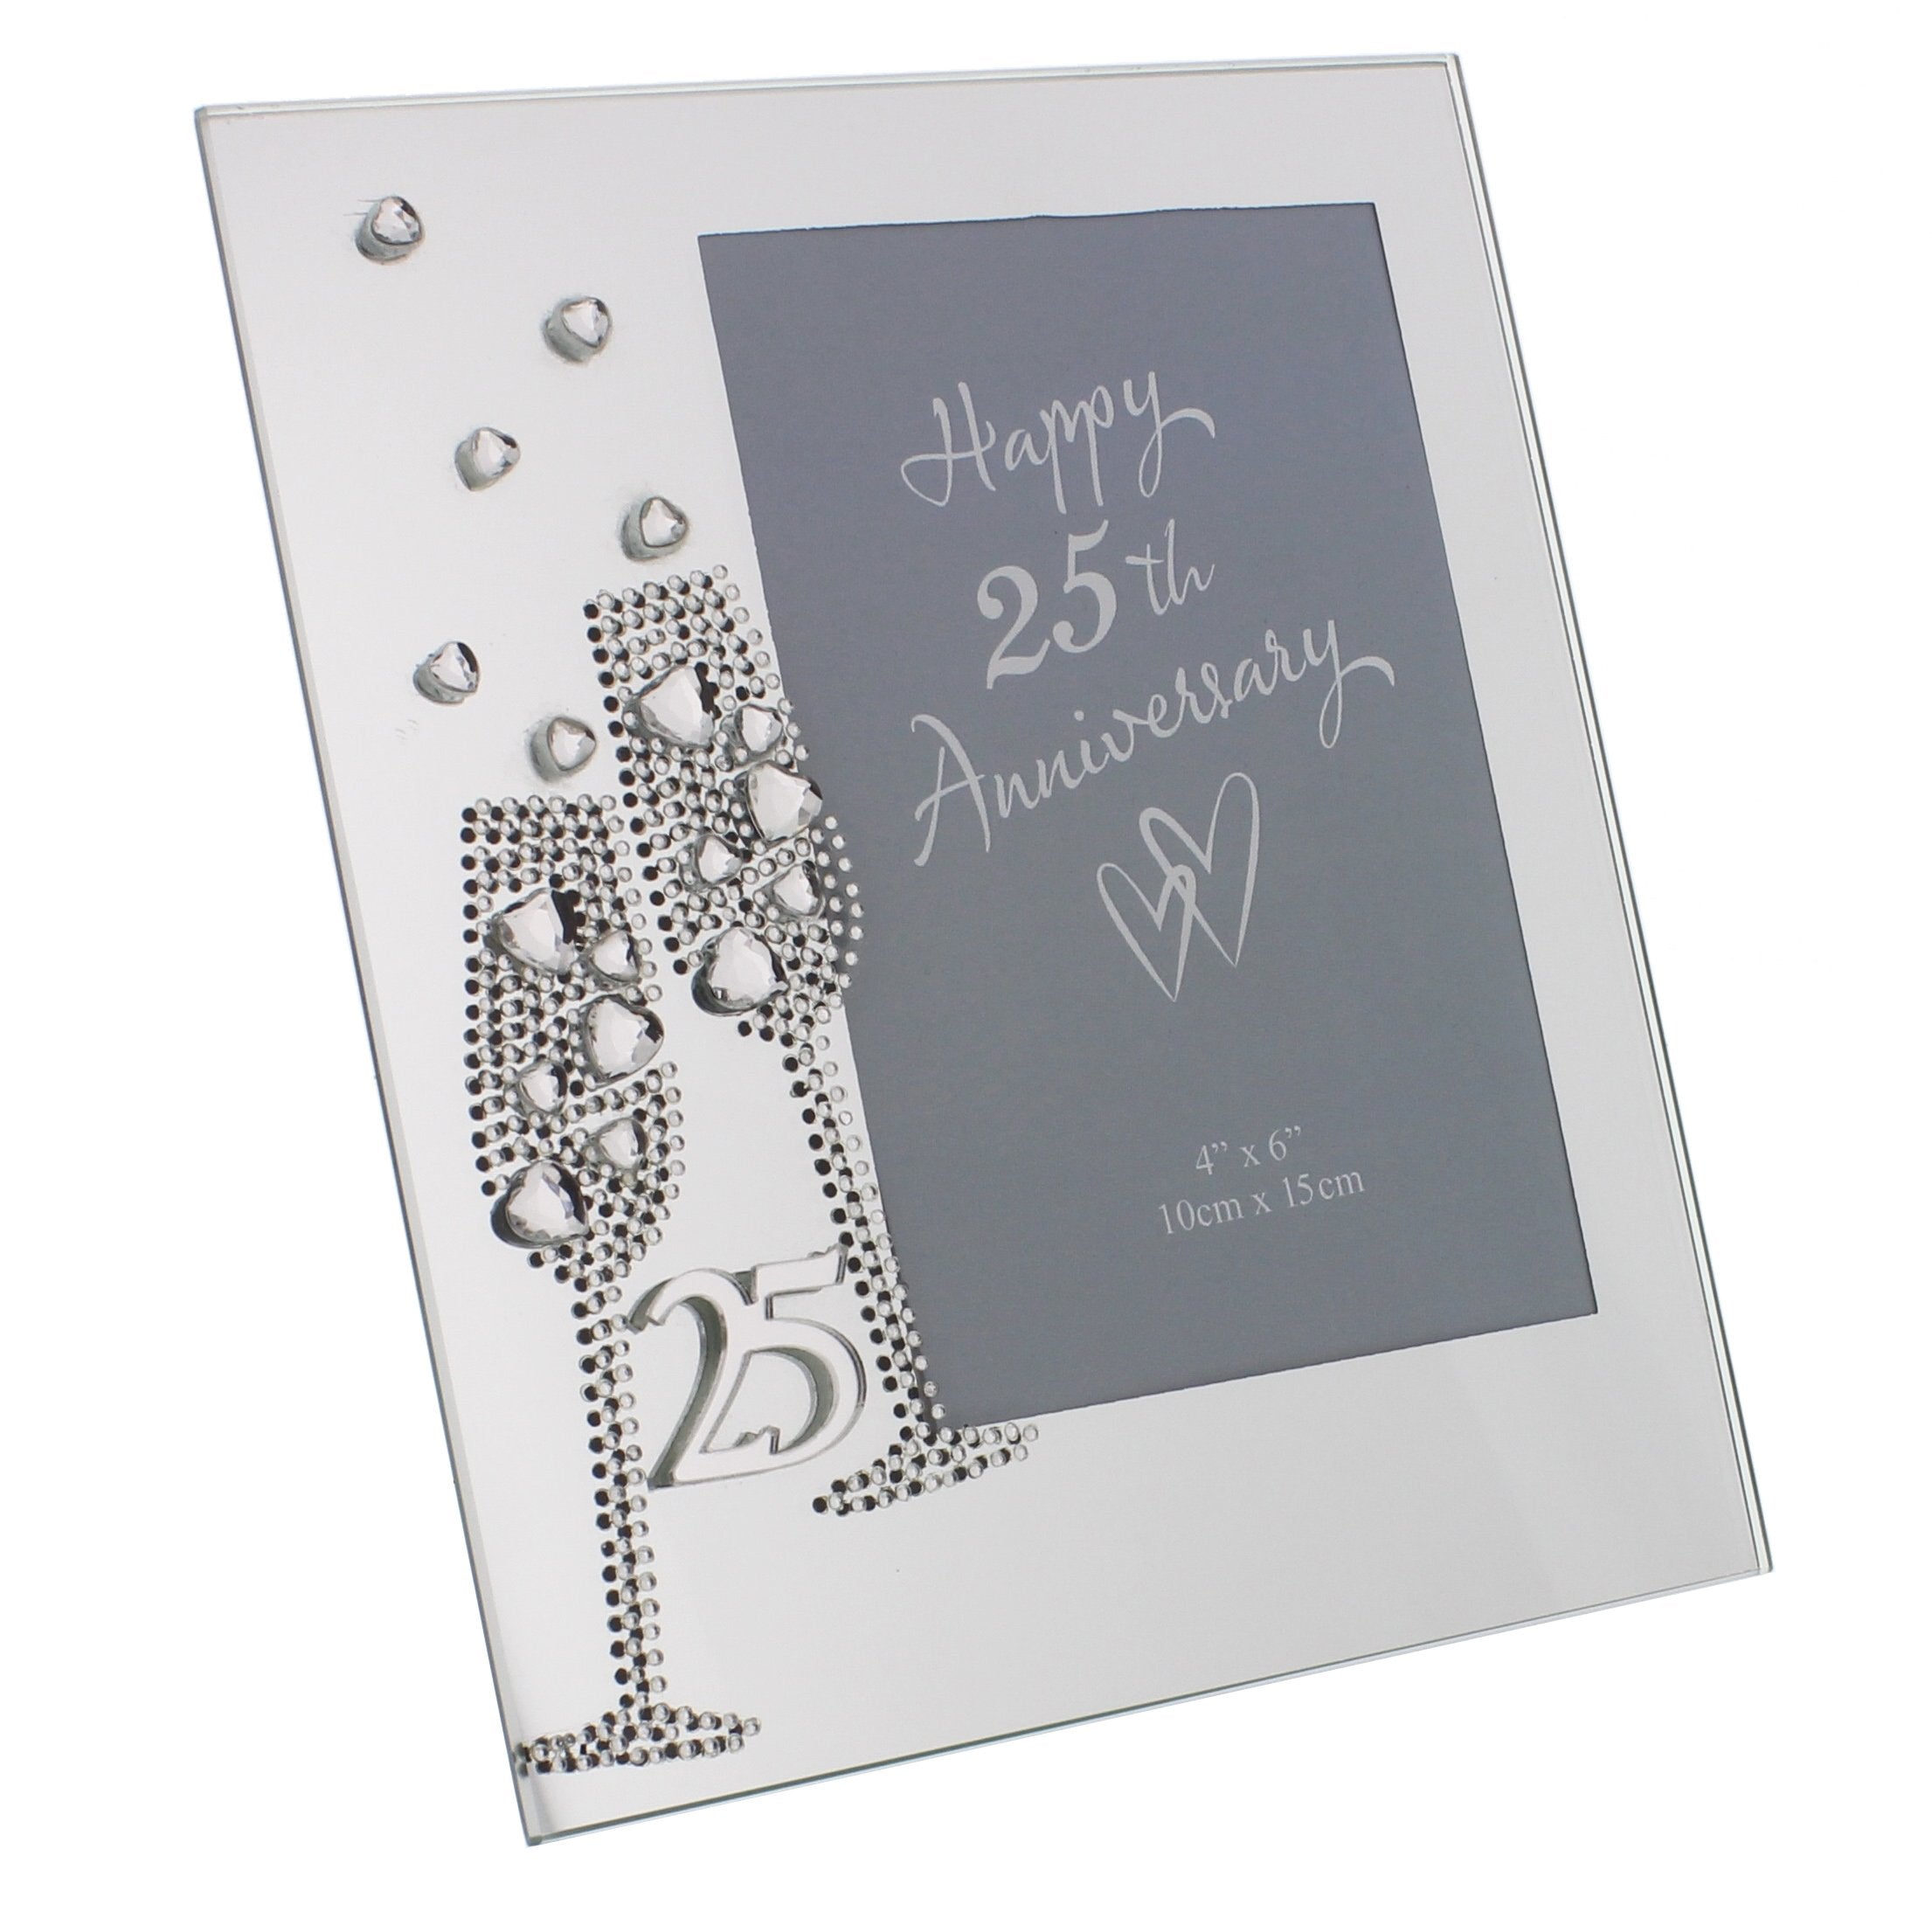 Diamante-Champagne-Glasses-Silver-25th-Wedding-Anniversary-Glass-Photo-Frame-7.5"-x-6.5"